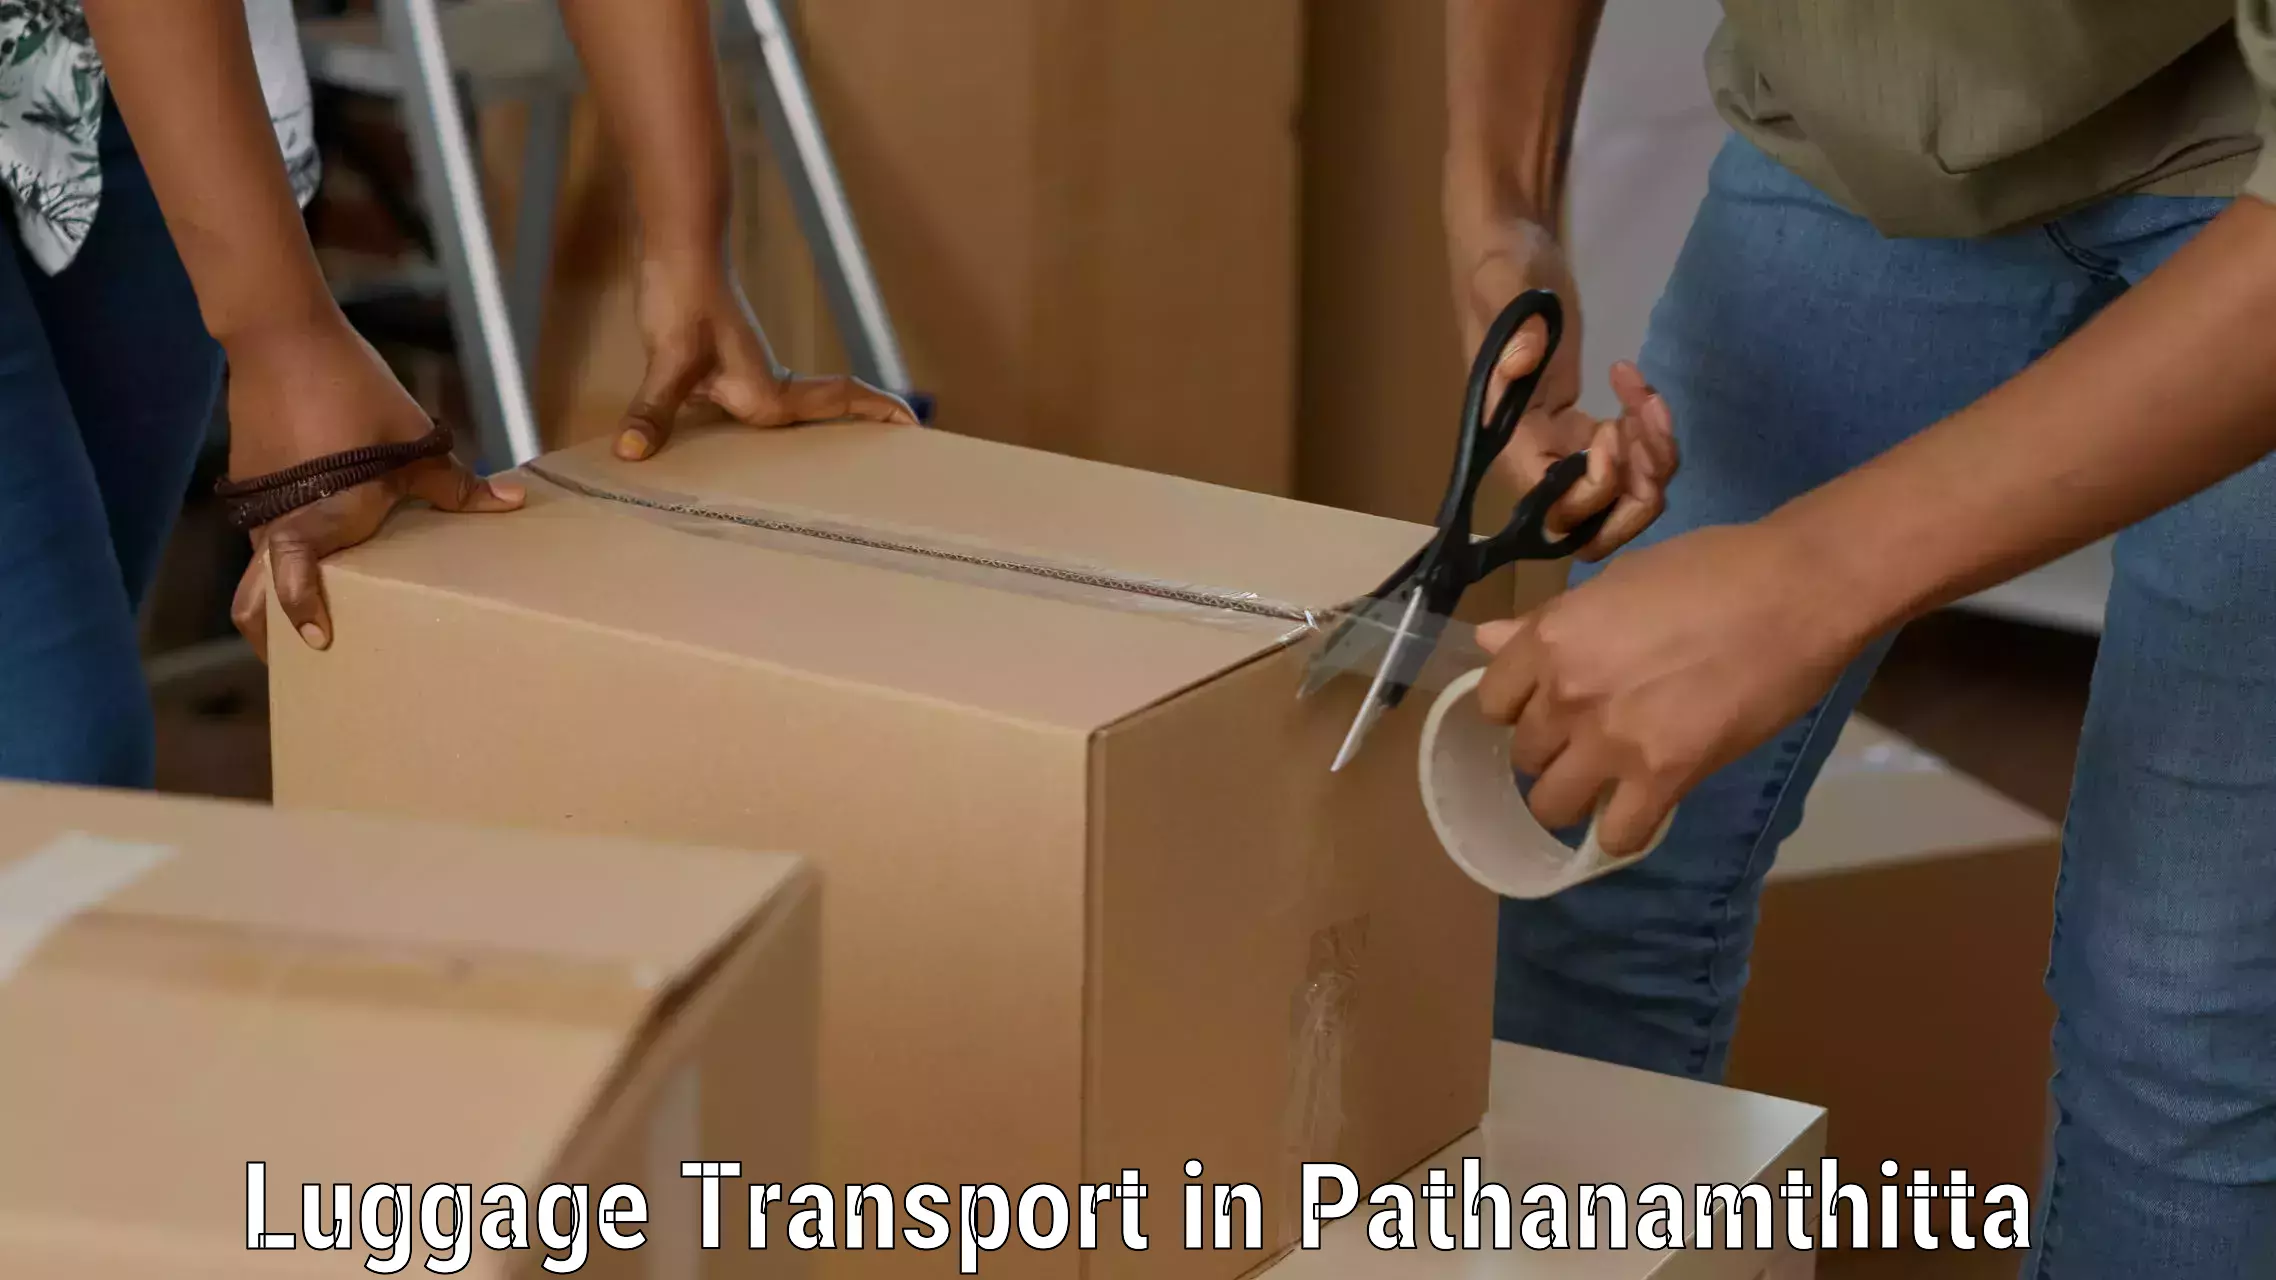 Nationwide luggage transport in Pathanamthitta